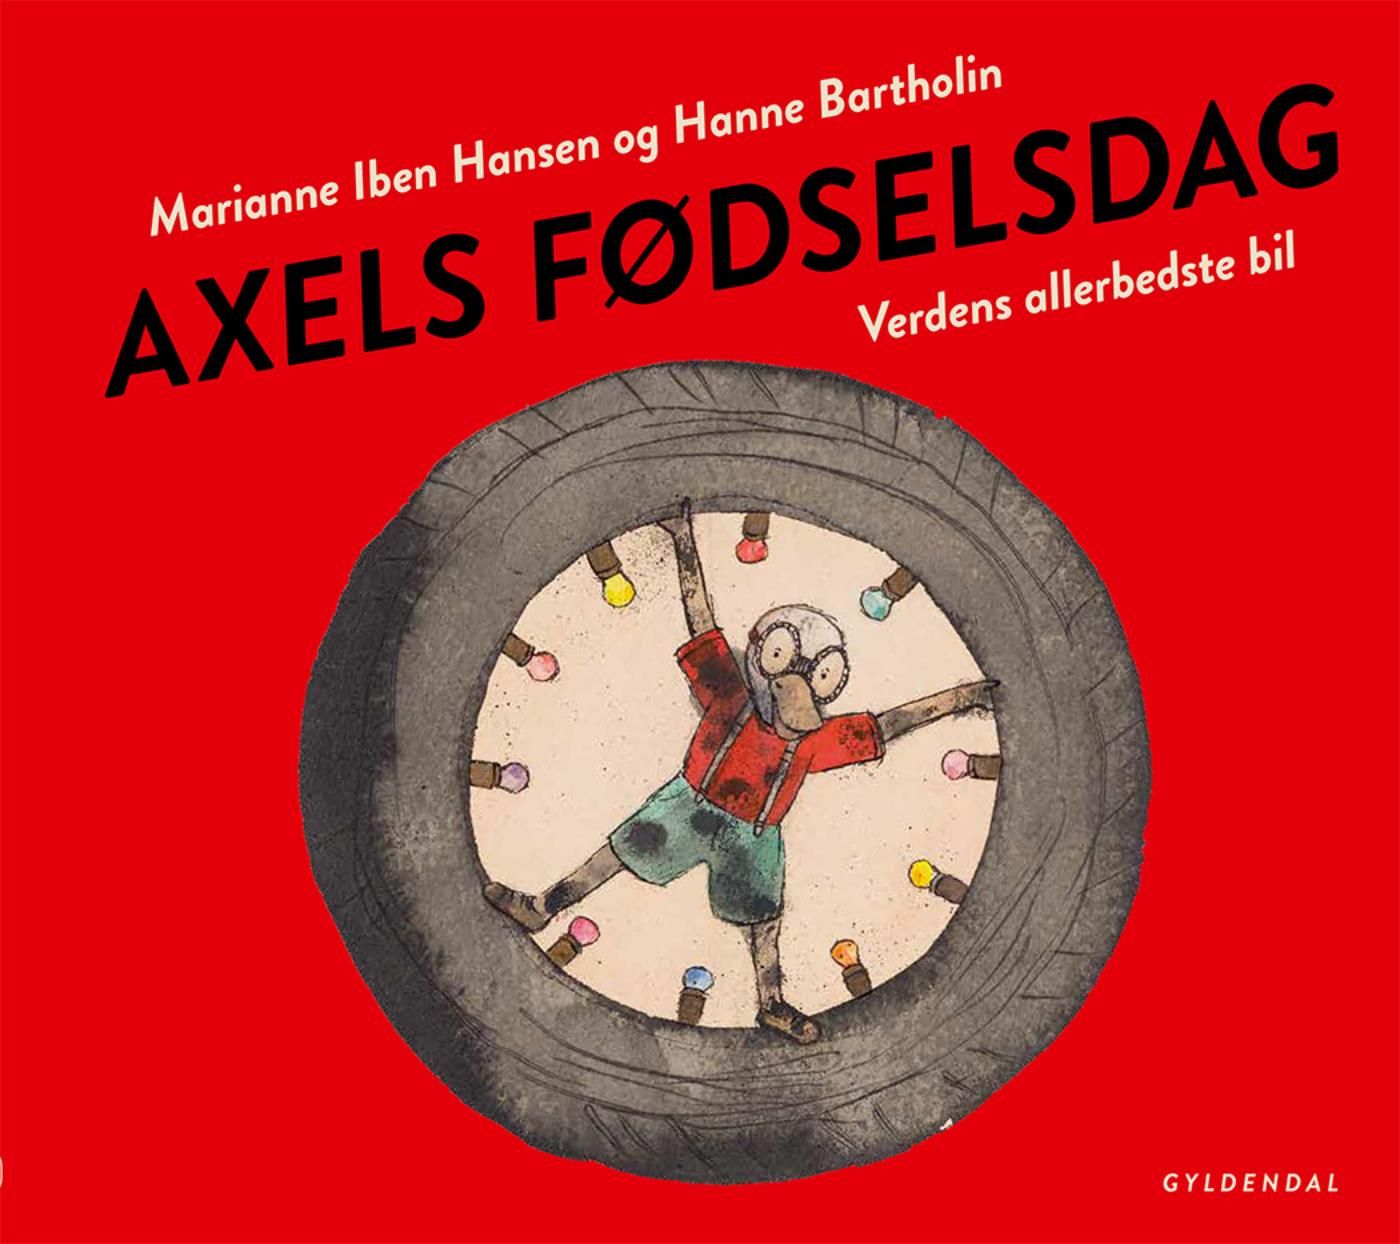 Axels fødselsdag. Verdens allerbedste bil - Lyt&læs, eBook by Marianne Iben Hansen